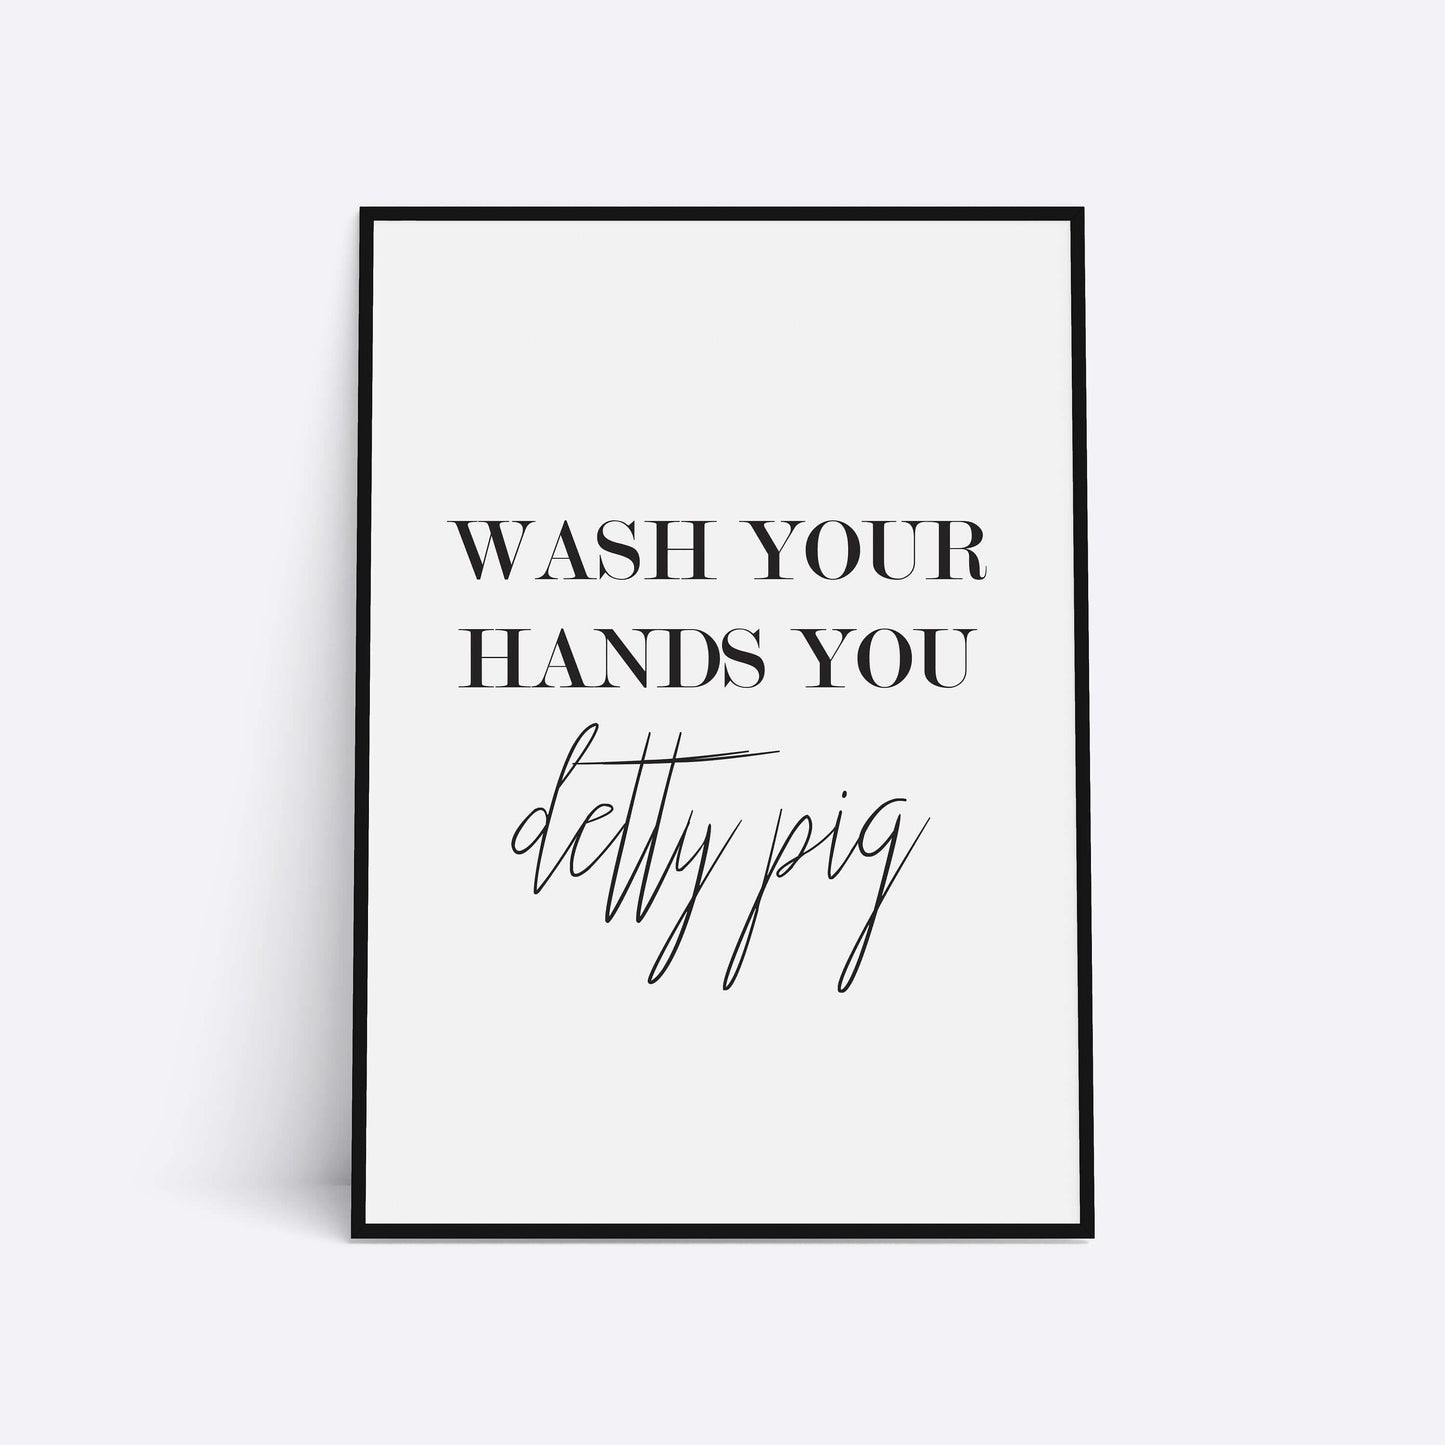 Wash Your Hands You Detty Pig, Bathroom Print, Bathroom Prints, Bathroom Wall Art, Bathroom Decor, Home Prints, Funny Bathroom Prints